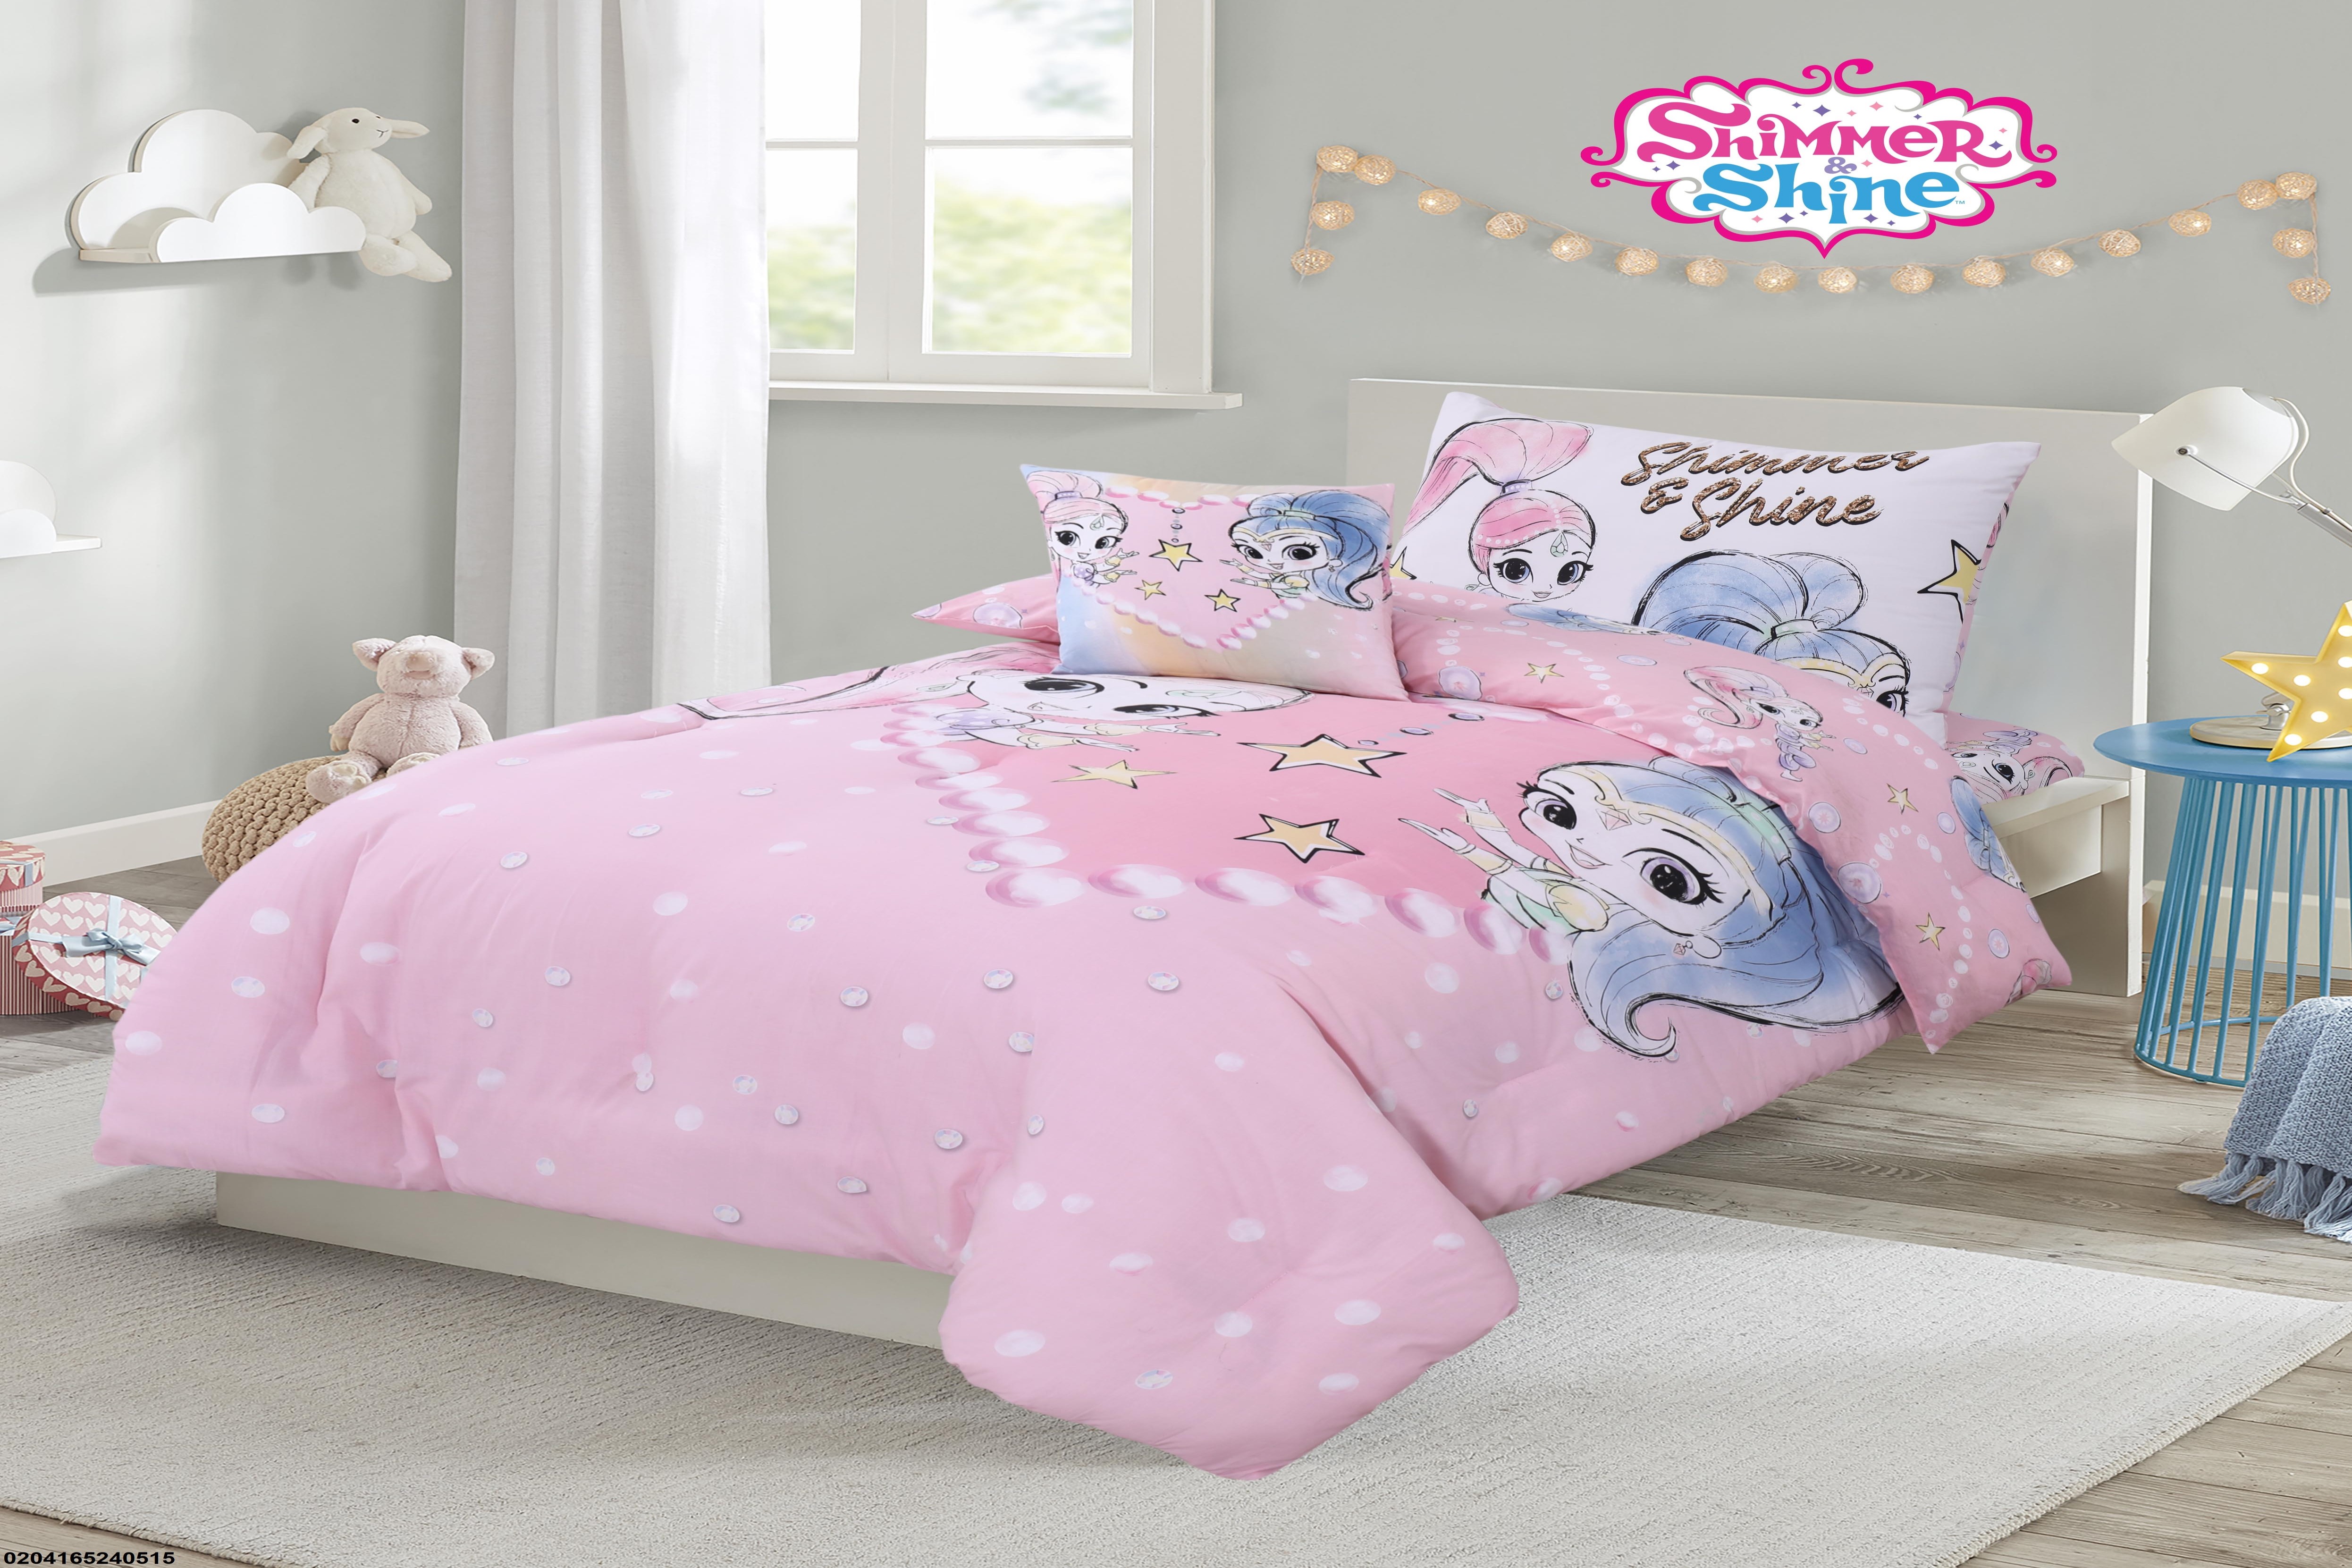 Shimmer & Shine Comforter 4Pcs Set